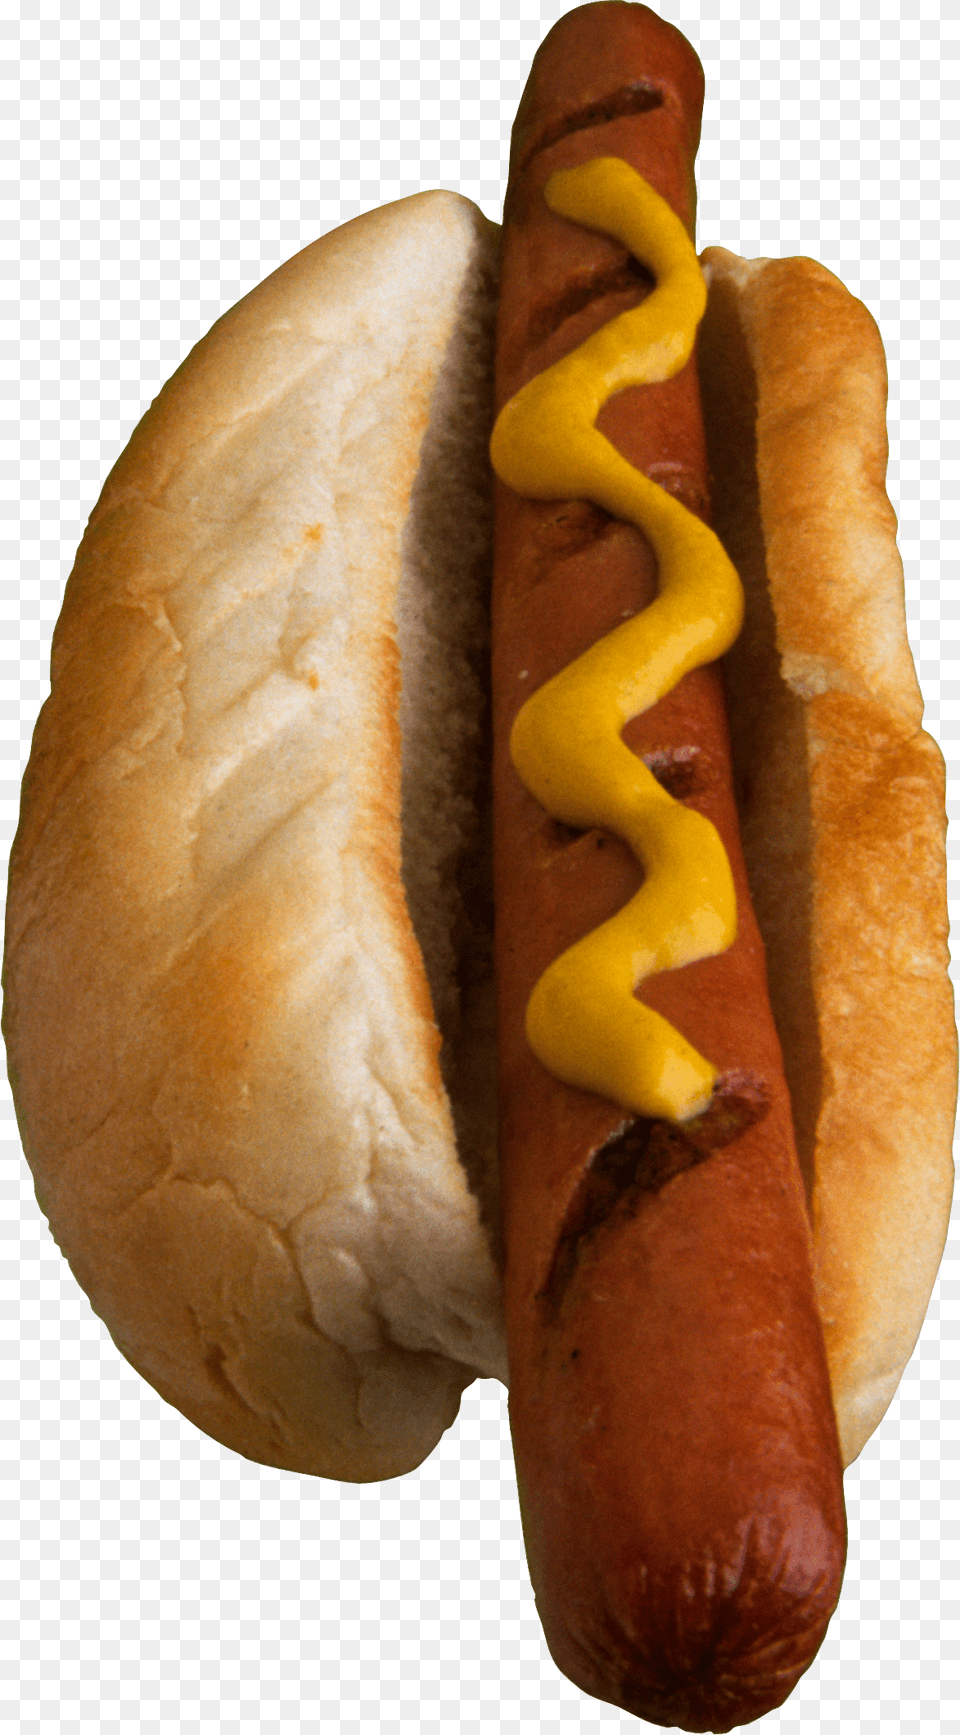 Hot Dog, Food, Hot Dog, Bread Png Image